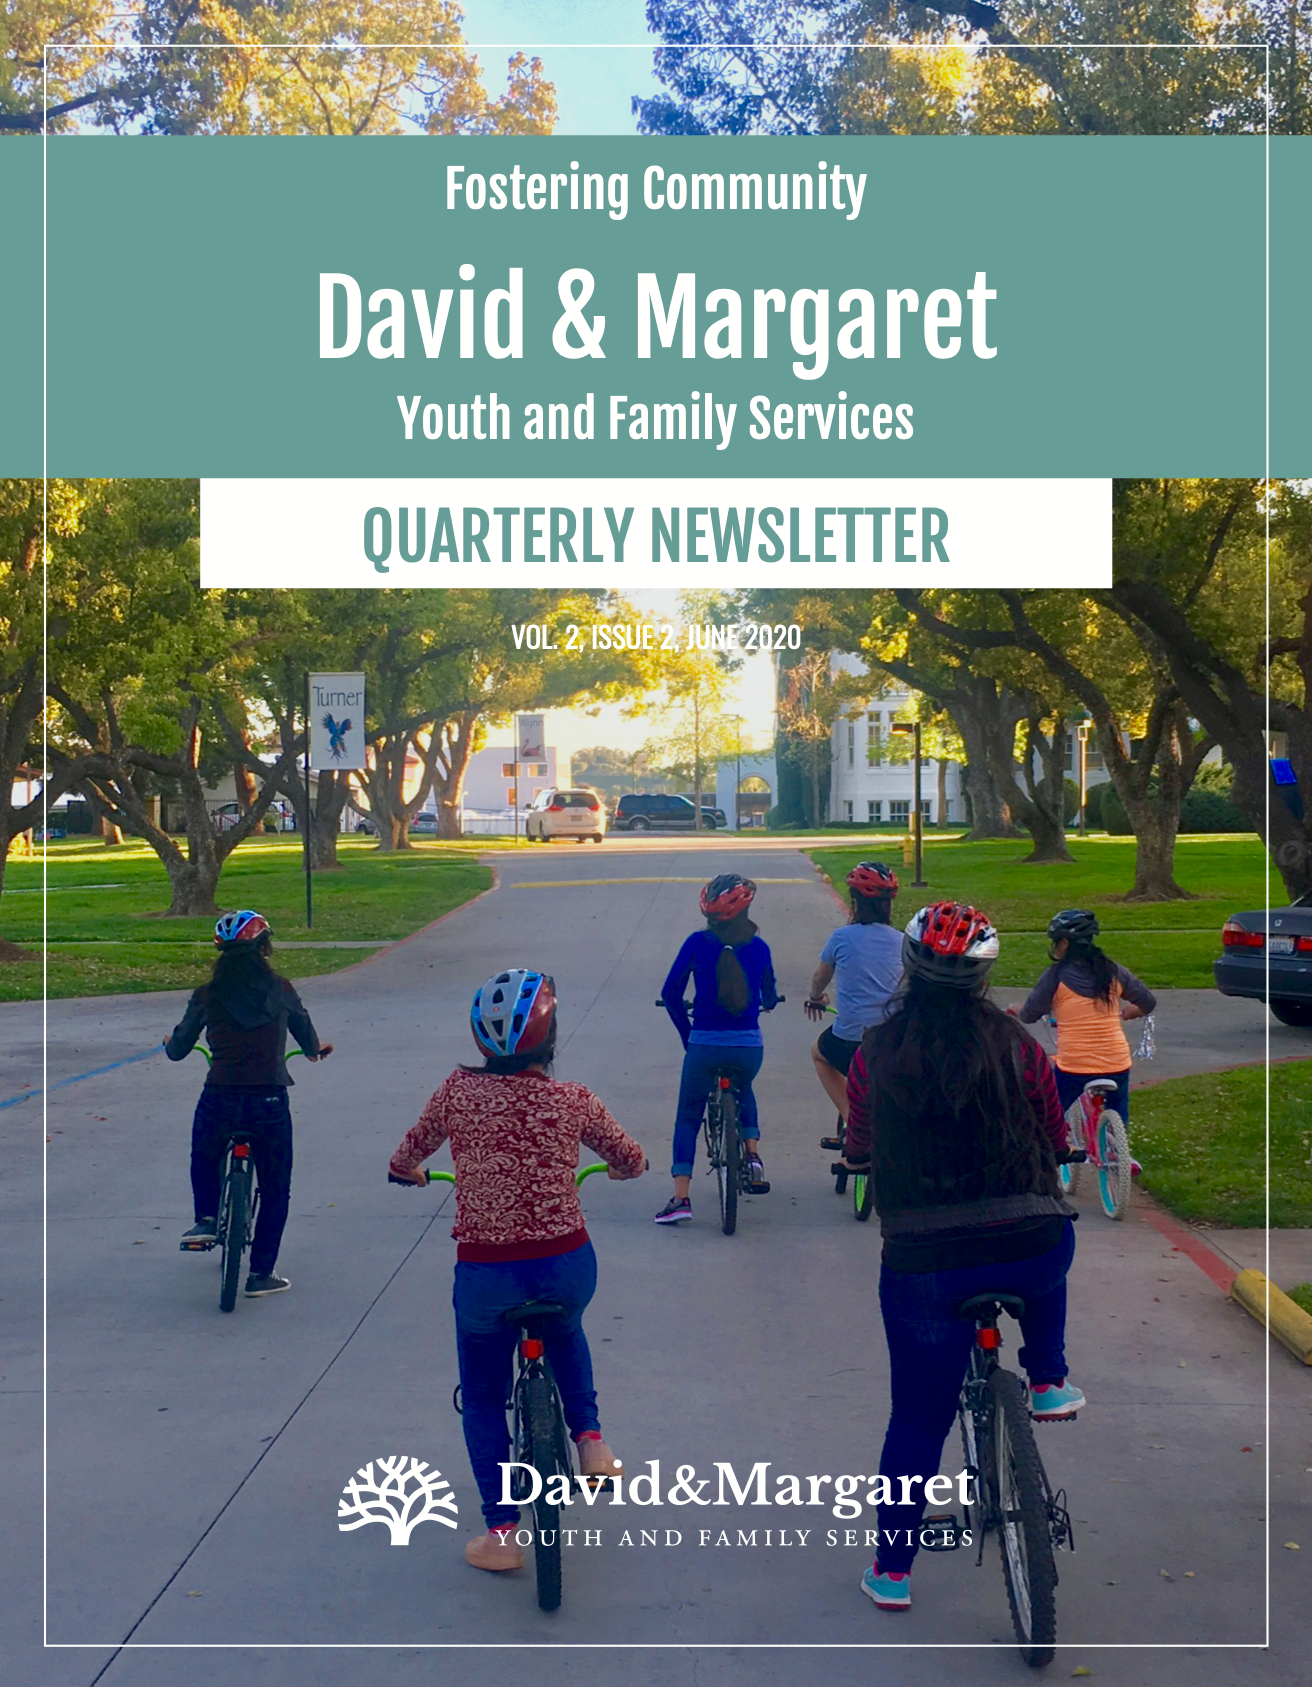 David & Margaret Quarterly Newsletter Vol. 2 Issue 2 2020